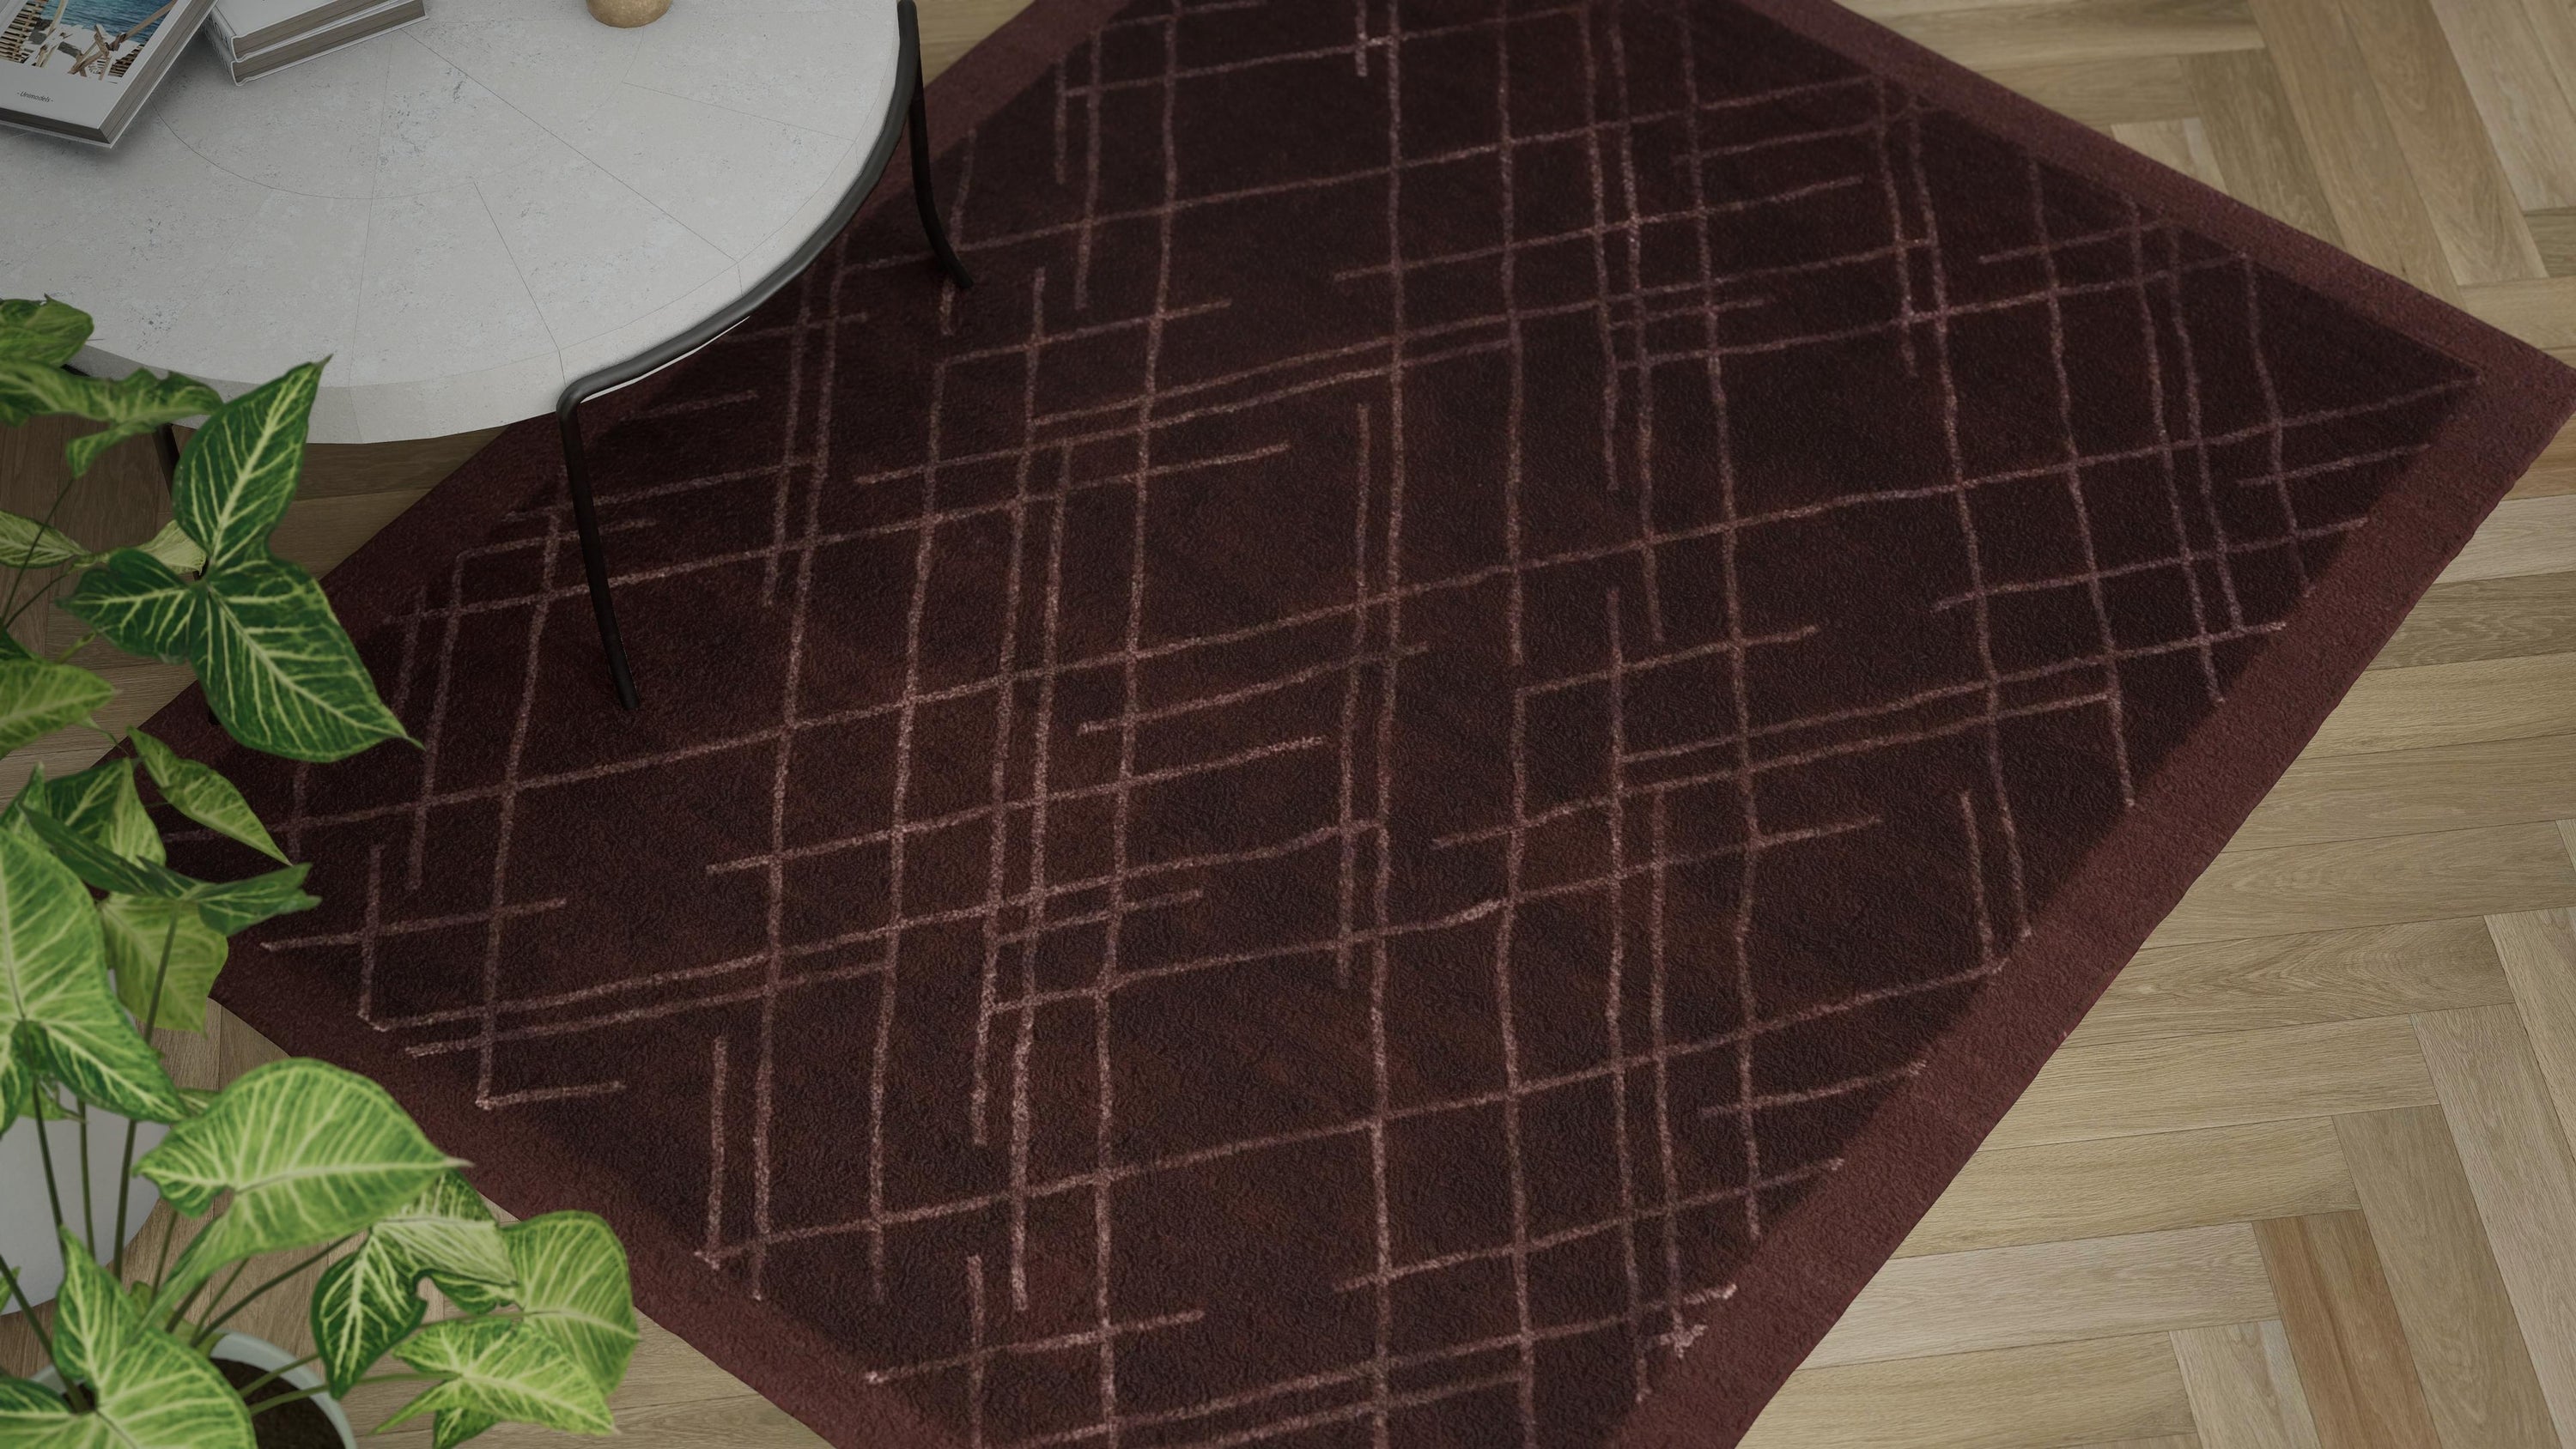 Brown Modern Wool Silk Blend Rug - 5'7" x 7'10"